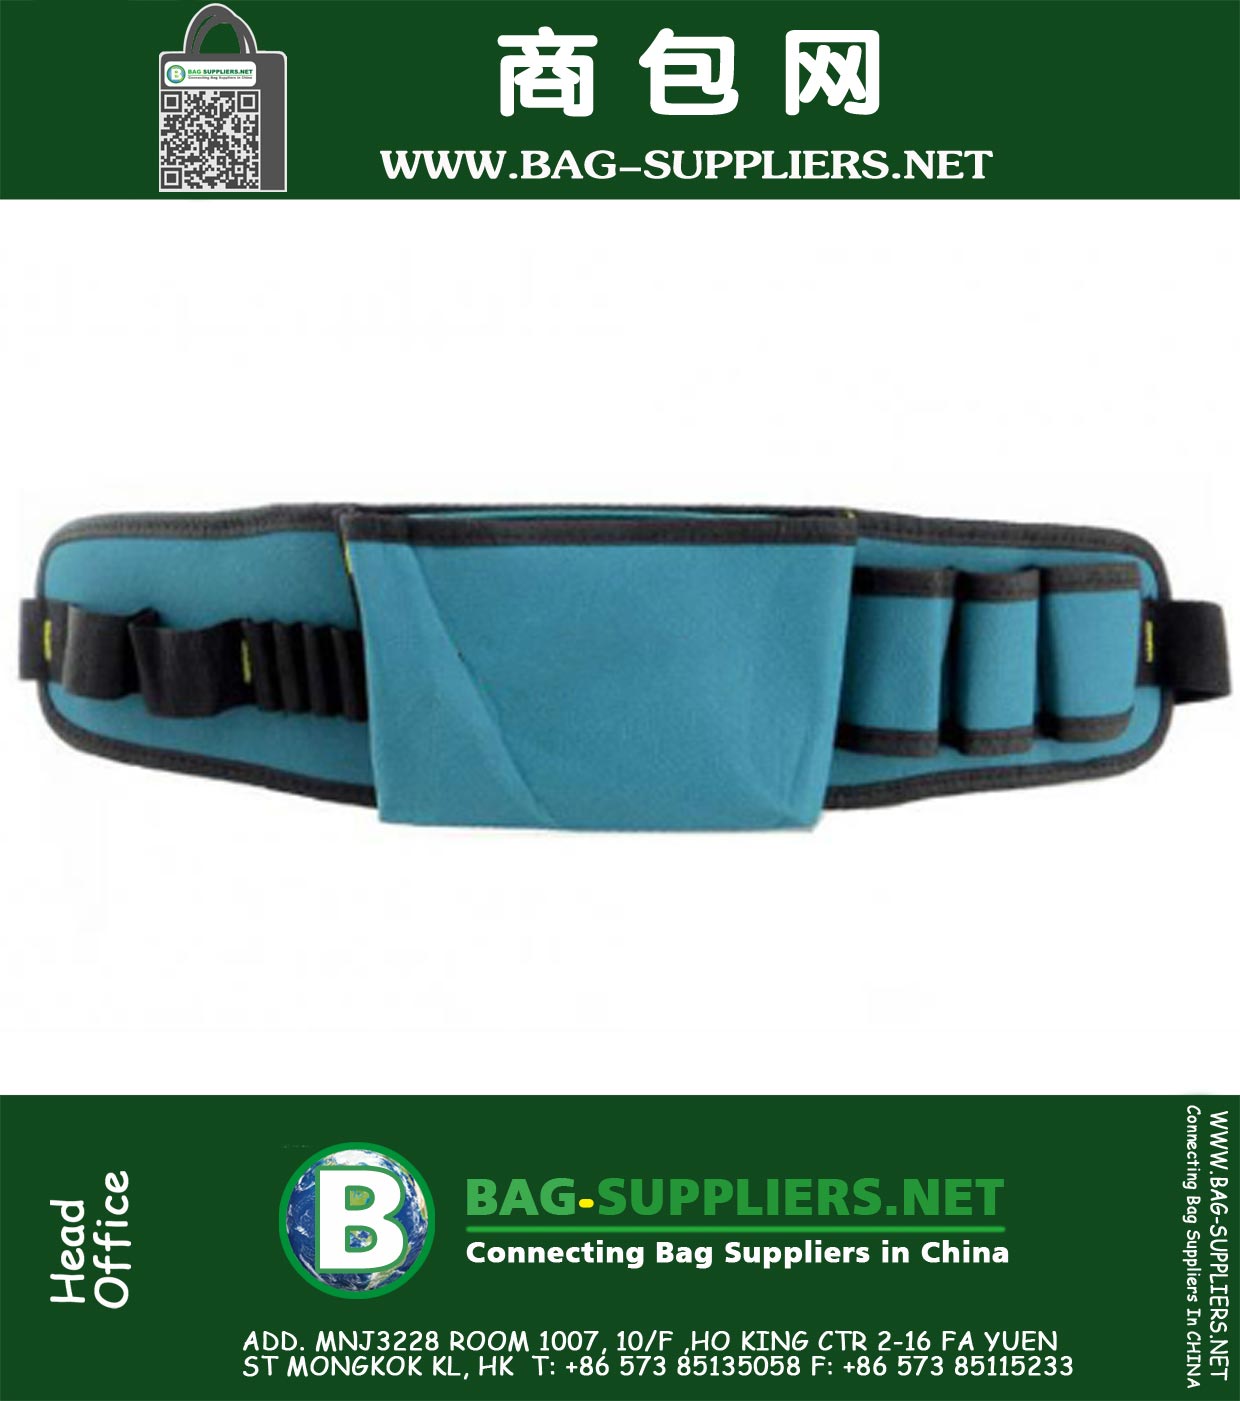 Hardware Mechanic Electrician Waterproof Canvas Tool Bag Belt Utility Kit Pocket Pouch Organizer